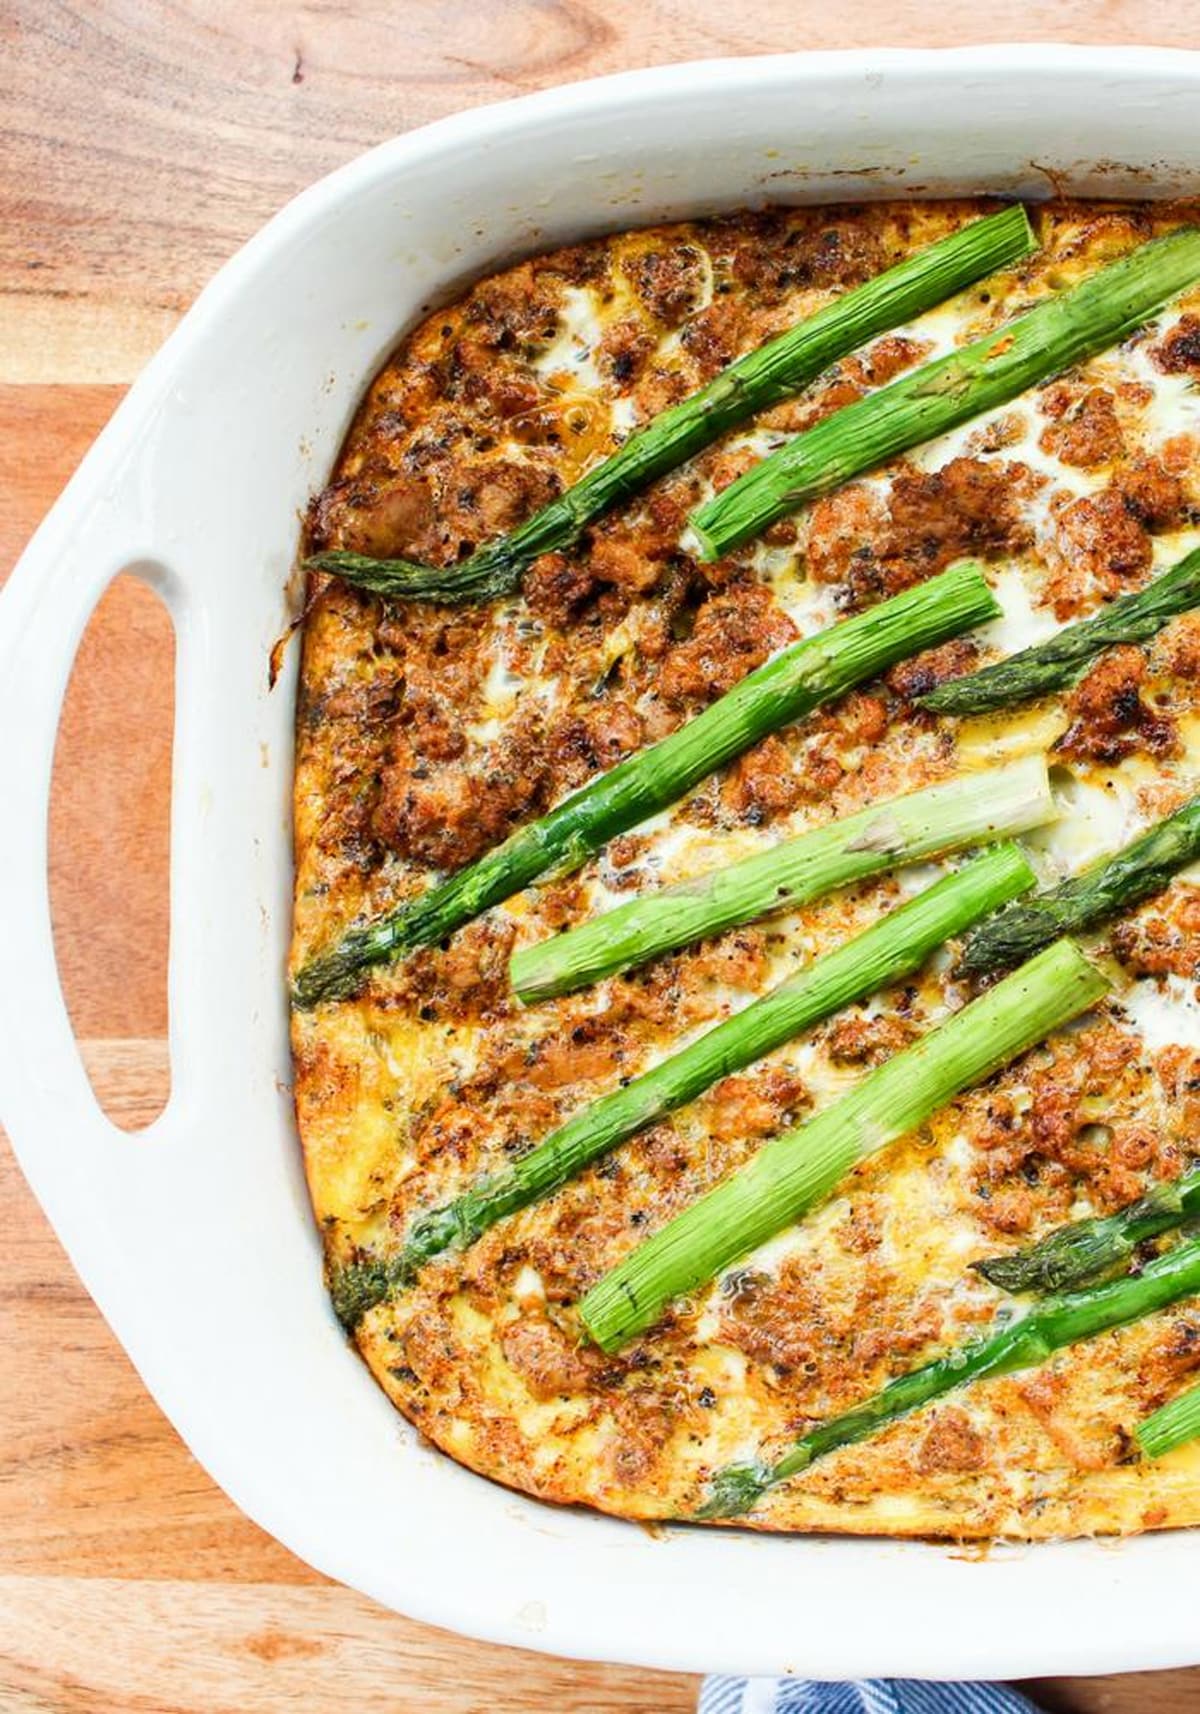 Turkey & asparagus breakfast casserole